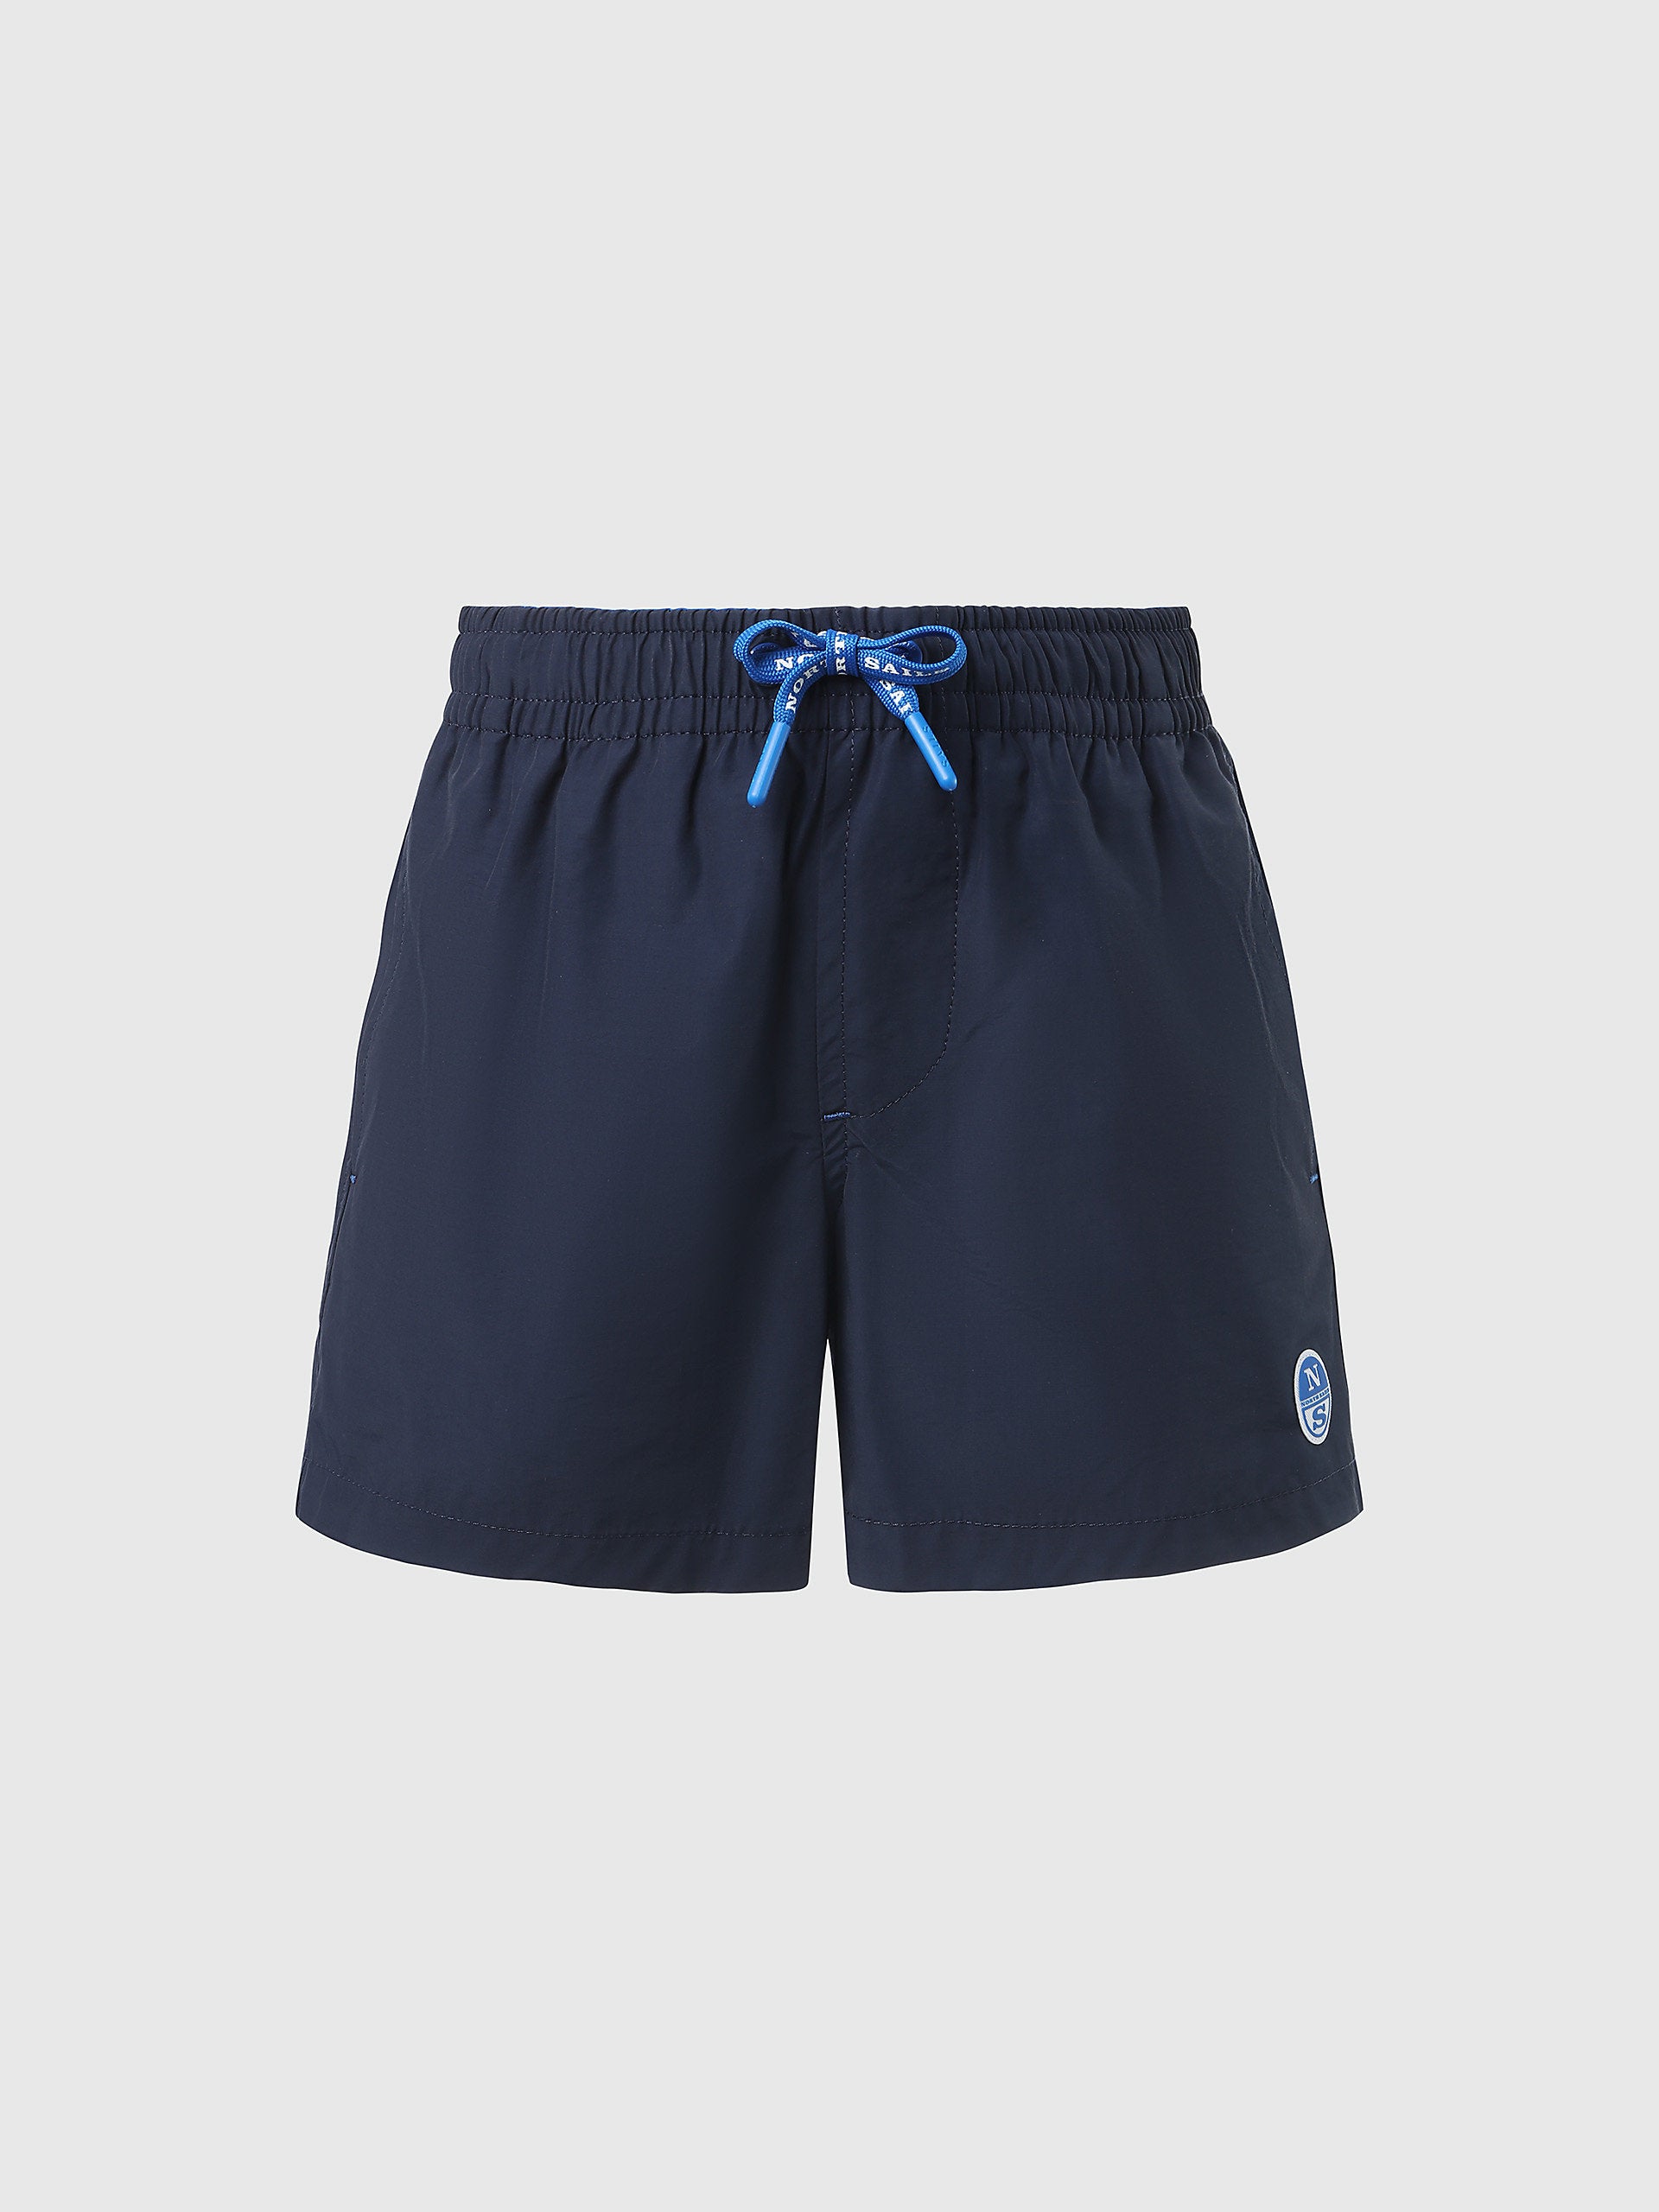 North Sails - Swim shorts with logo patchNorth SailsNavy blue6